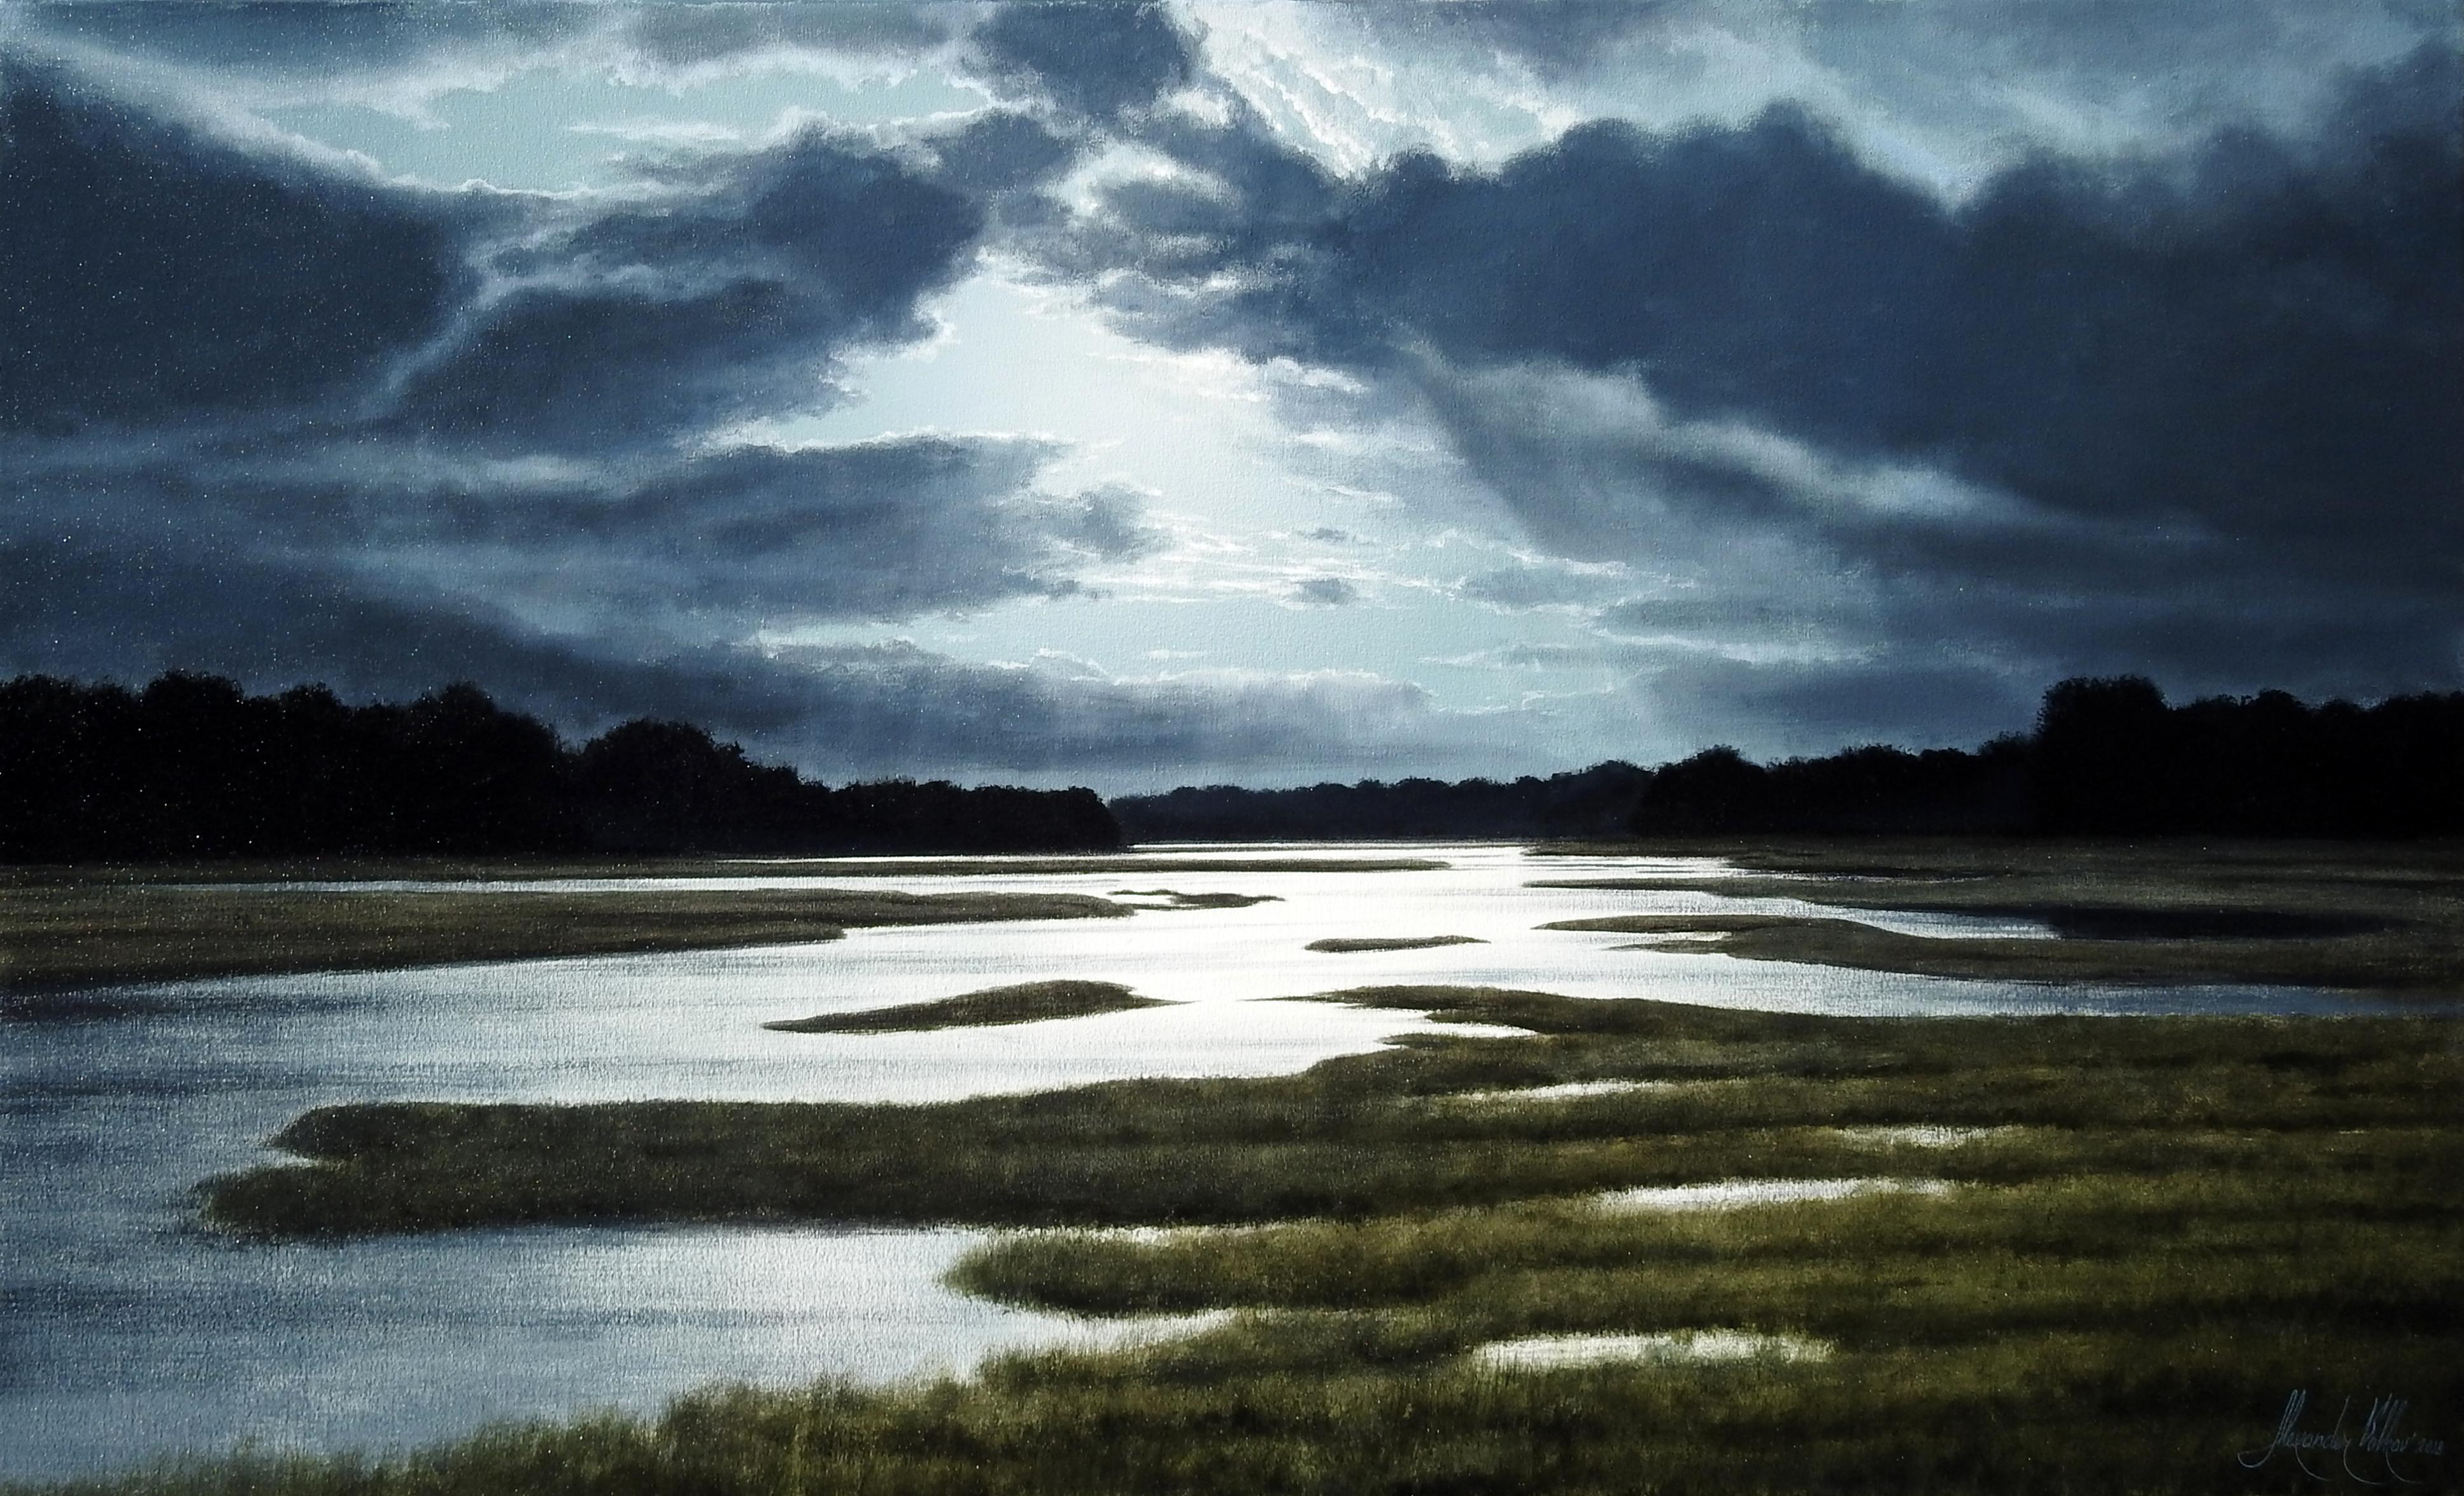 "Moontide", Alexander Volkov, 24x48, Oil on Canvas, Photorealism, Landscape